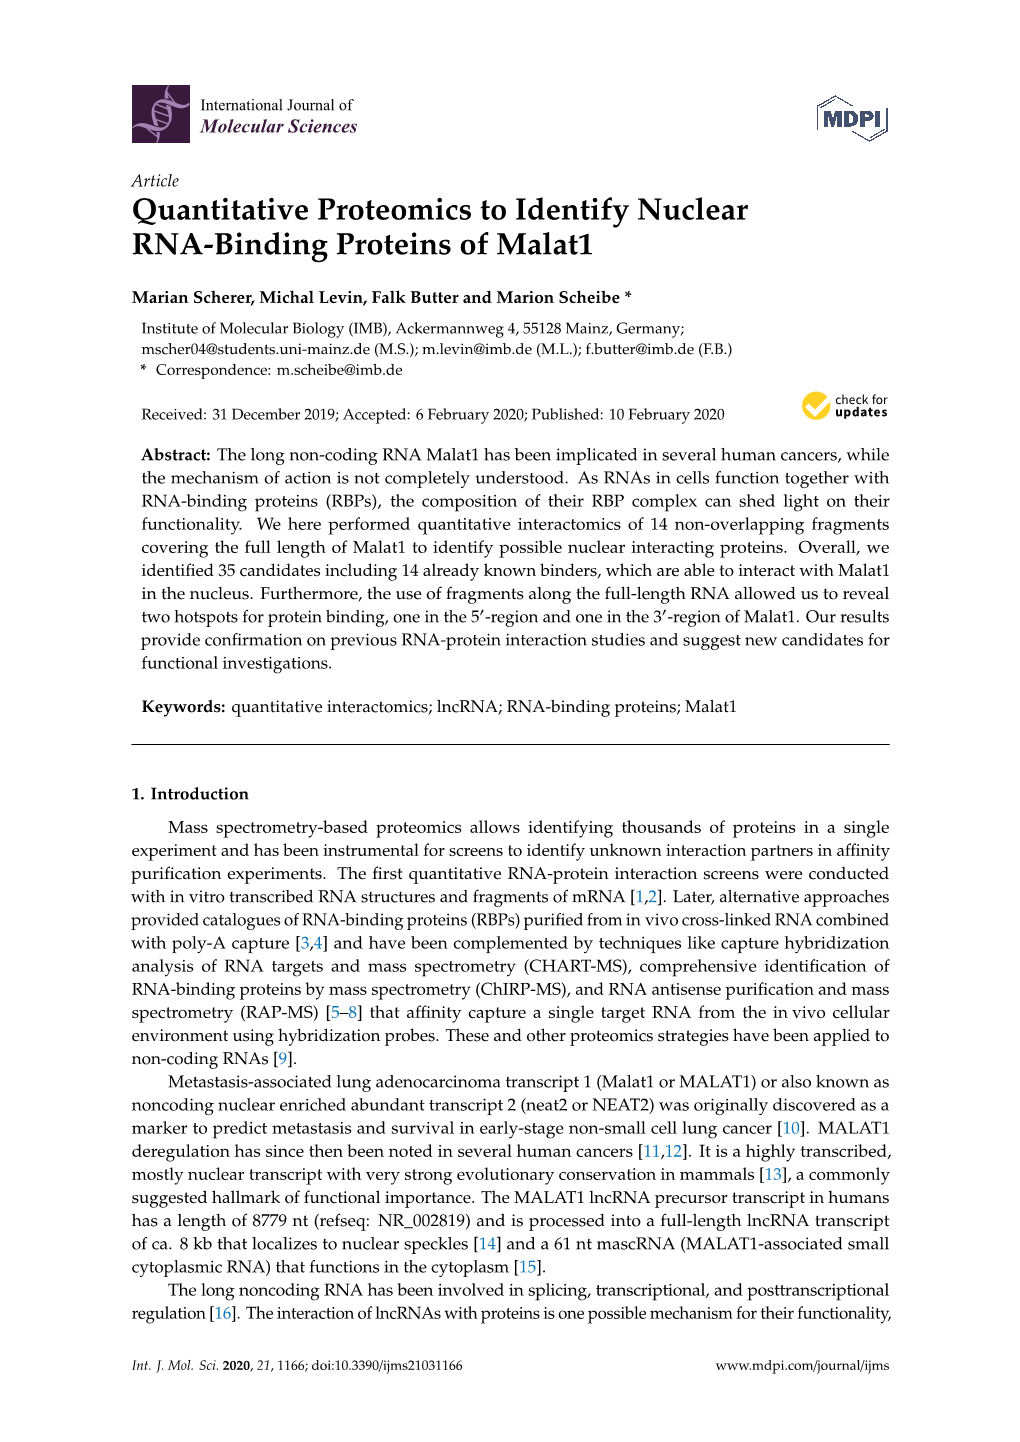 Quantitative Proteomics to Identify Nuclear RNA-Binding Proteins of Malat1